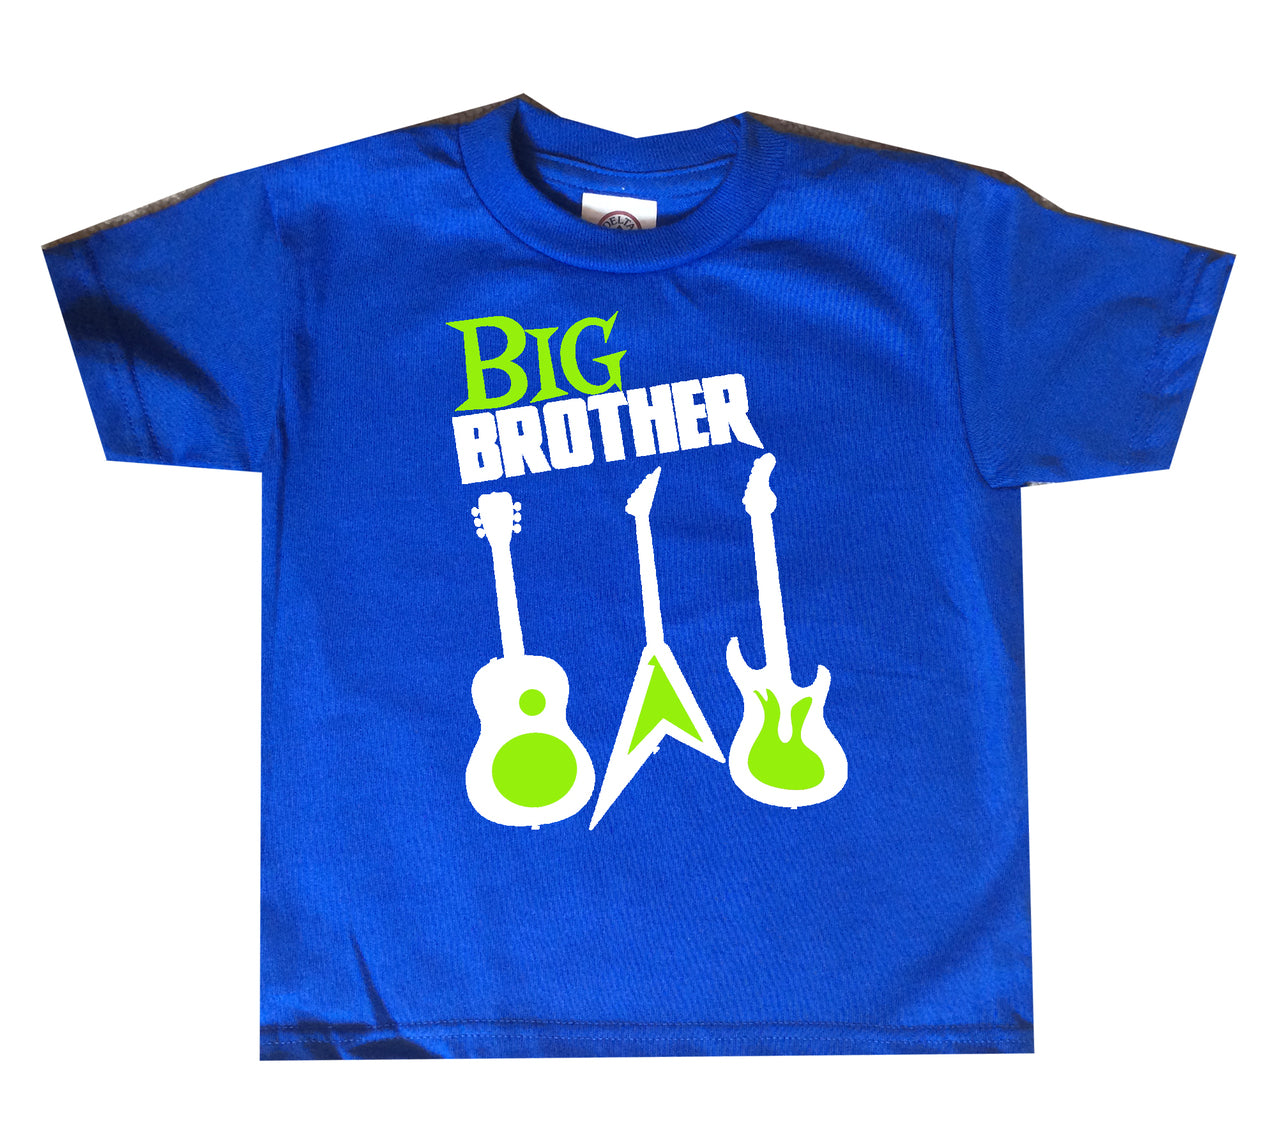 Rockstar Big Brother Shirt - Guitar sibling Tee